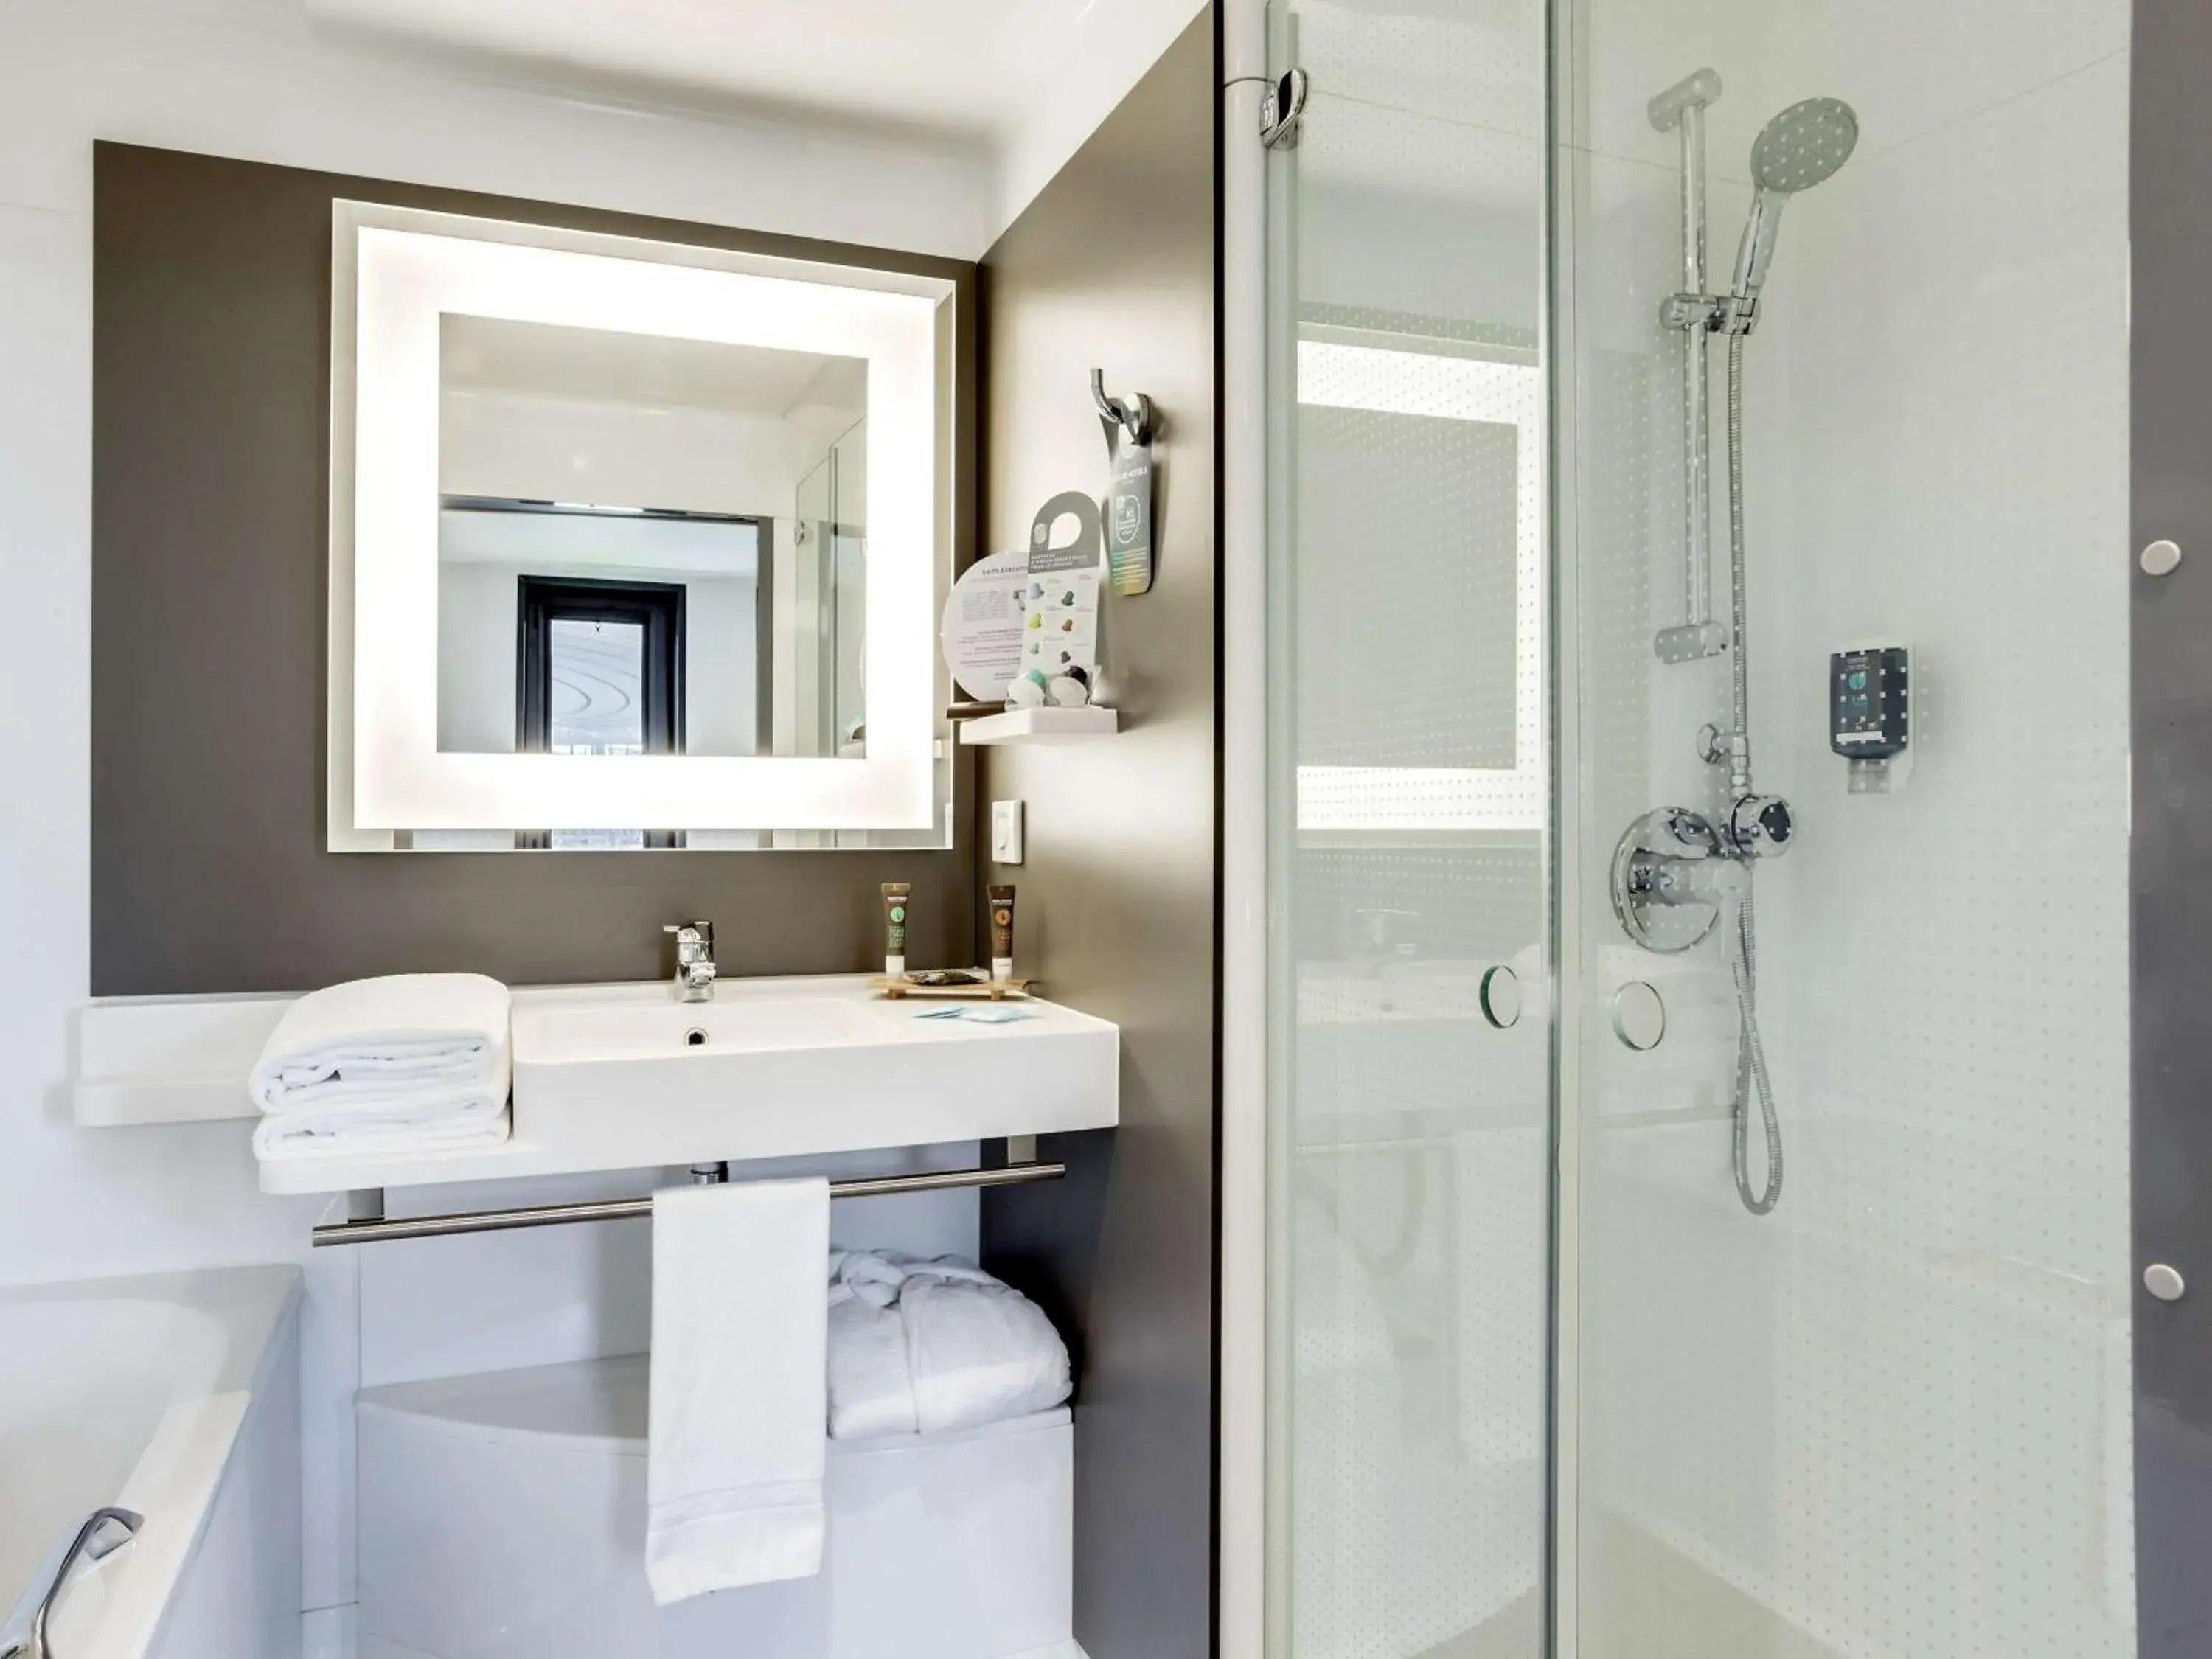 Photo of the whole room, Bathroom in Novotel Suites Paris Stade de France